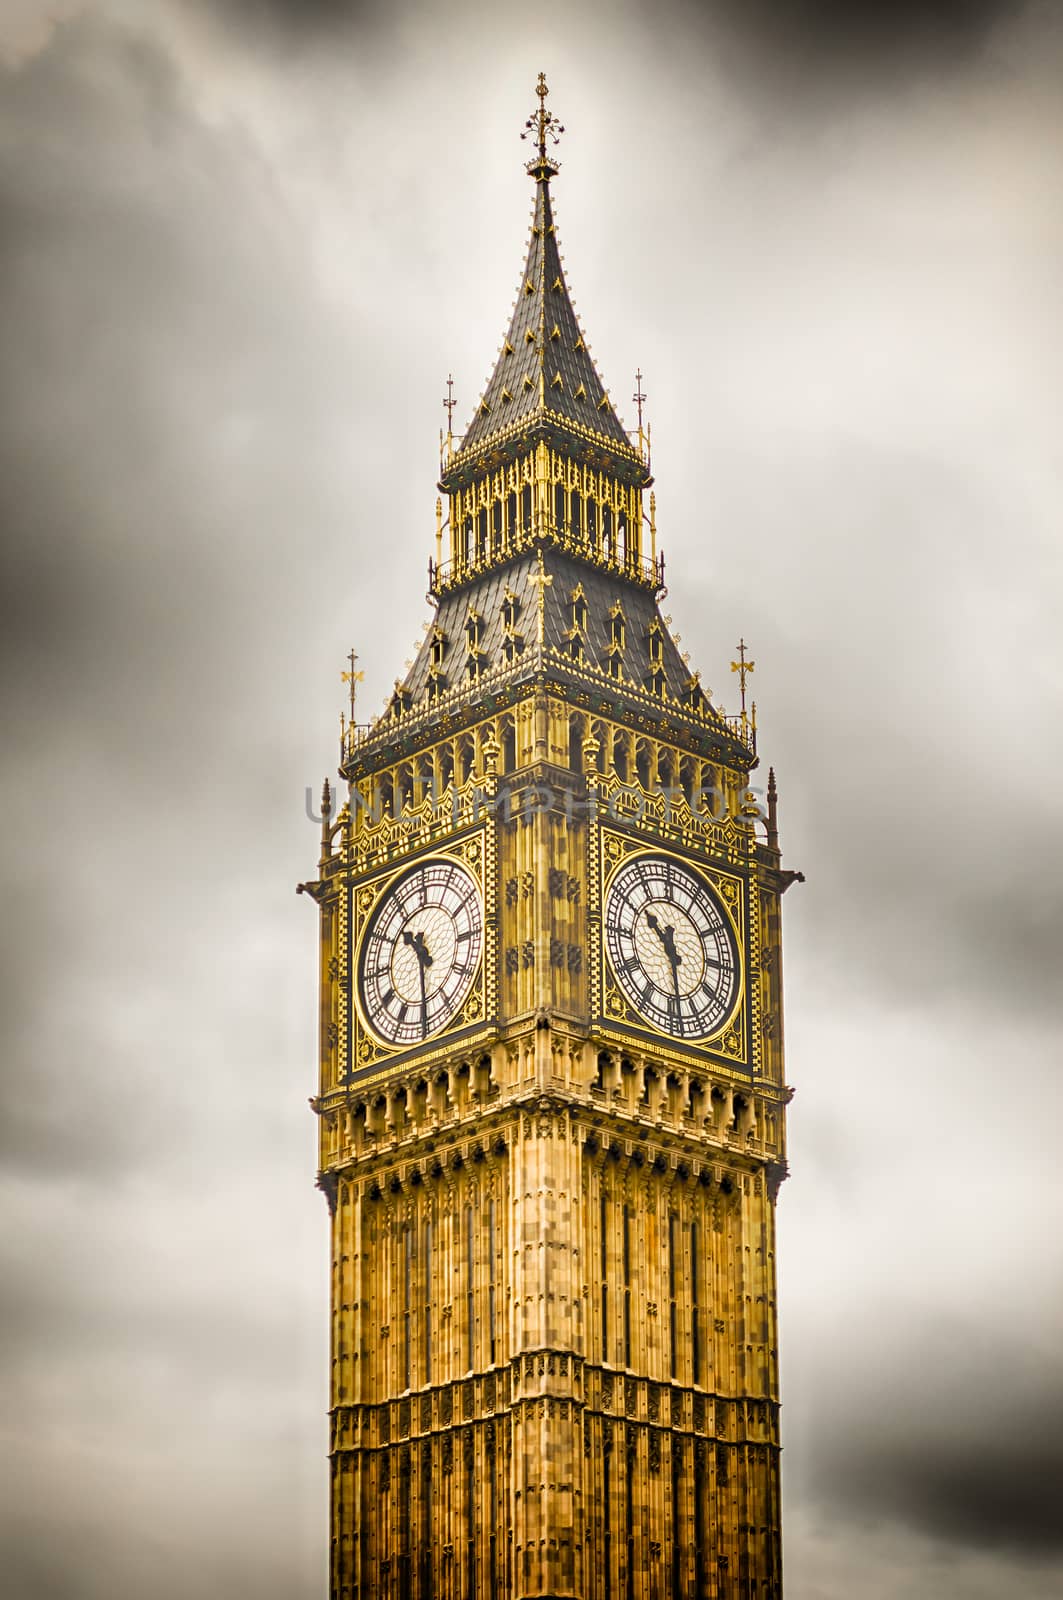 The Big Ben, Houses of Parliament, London by marcorubino